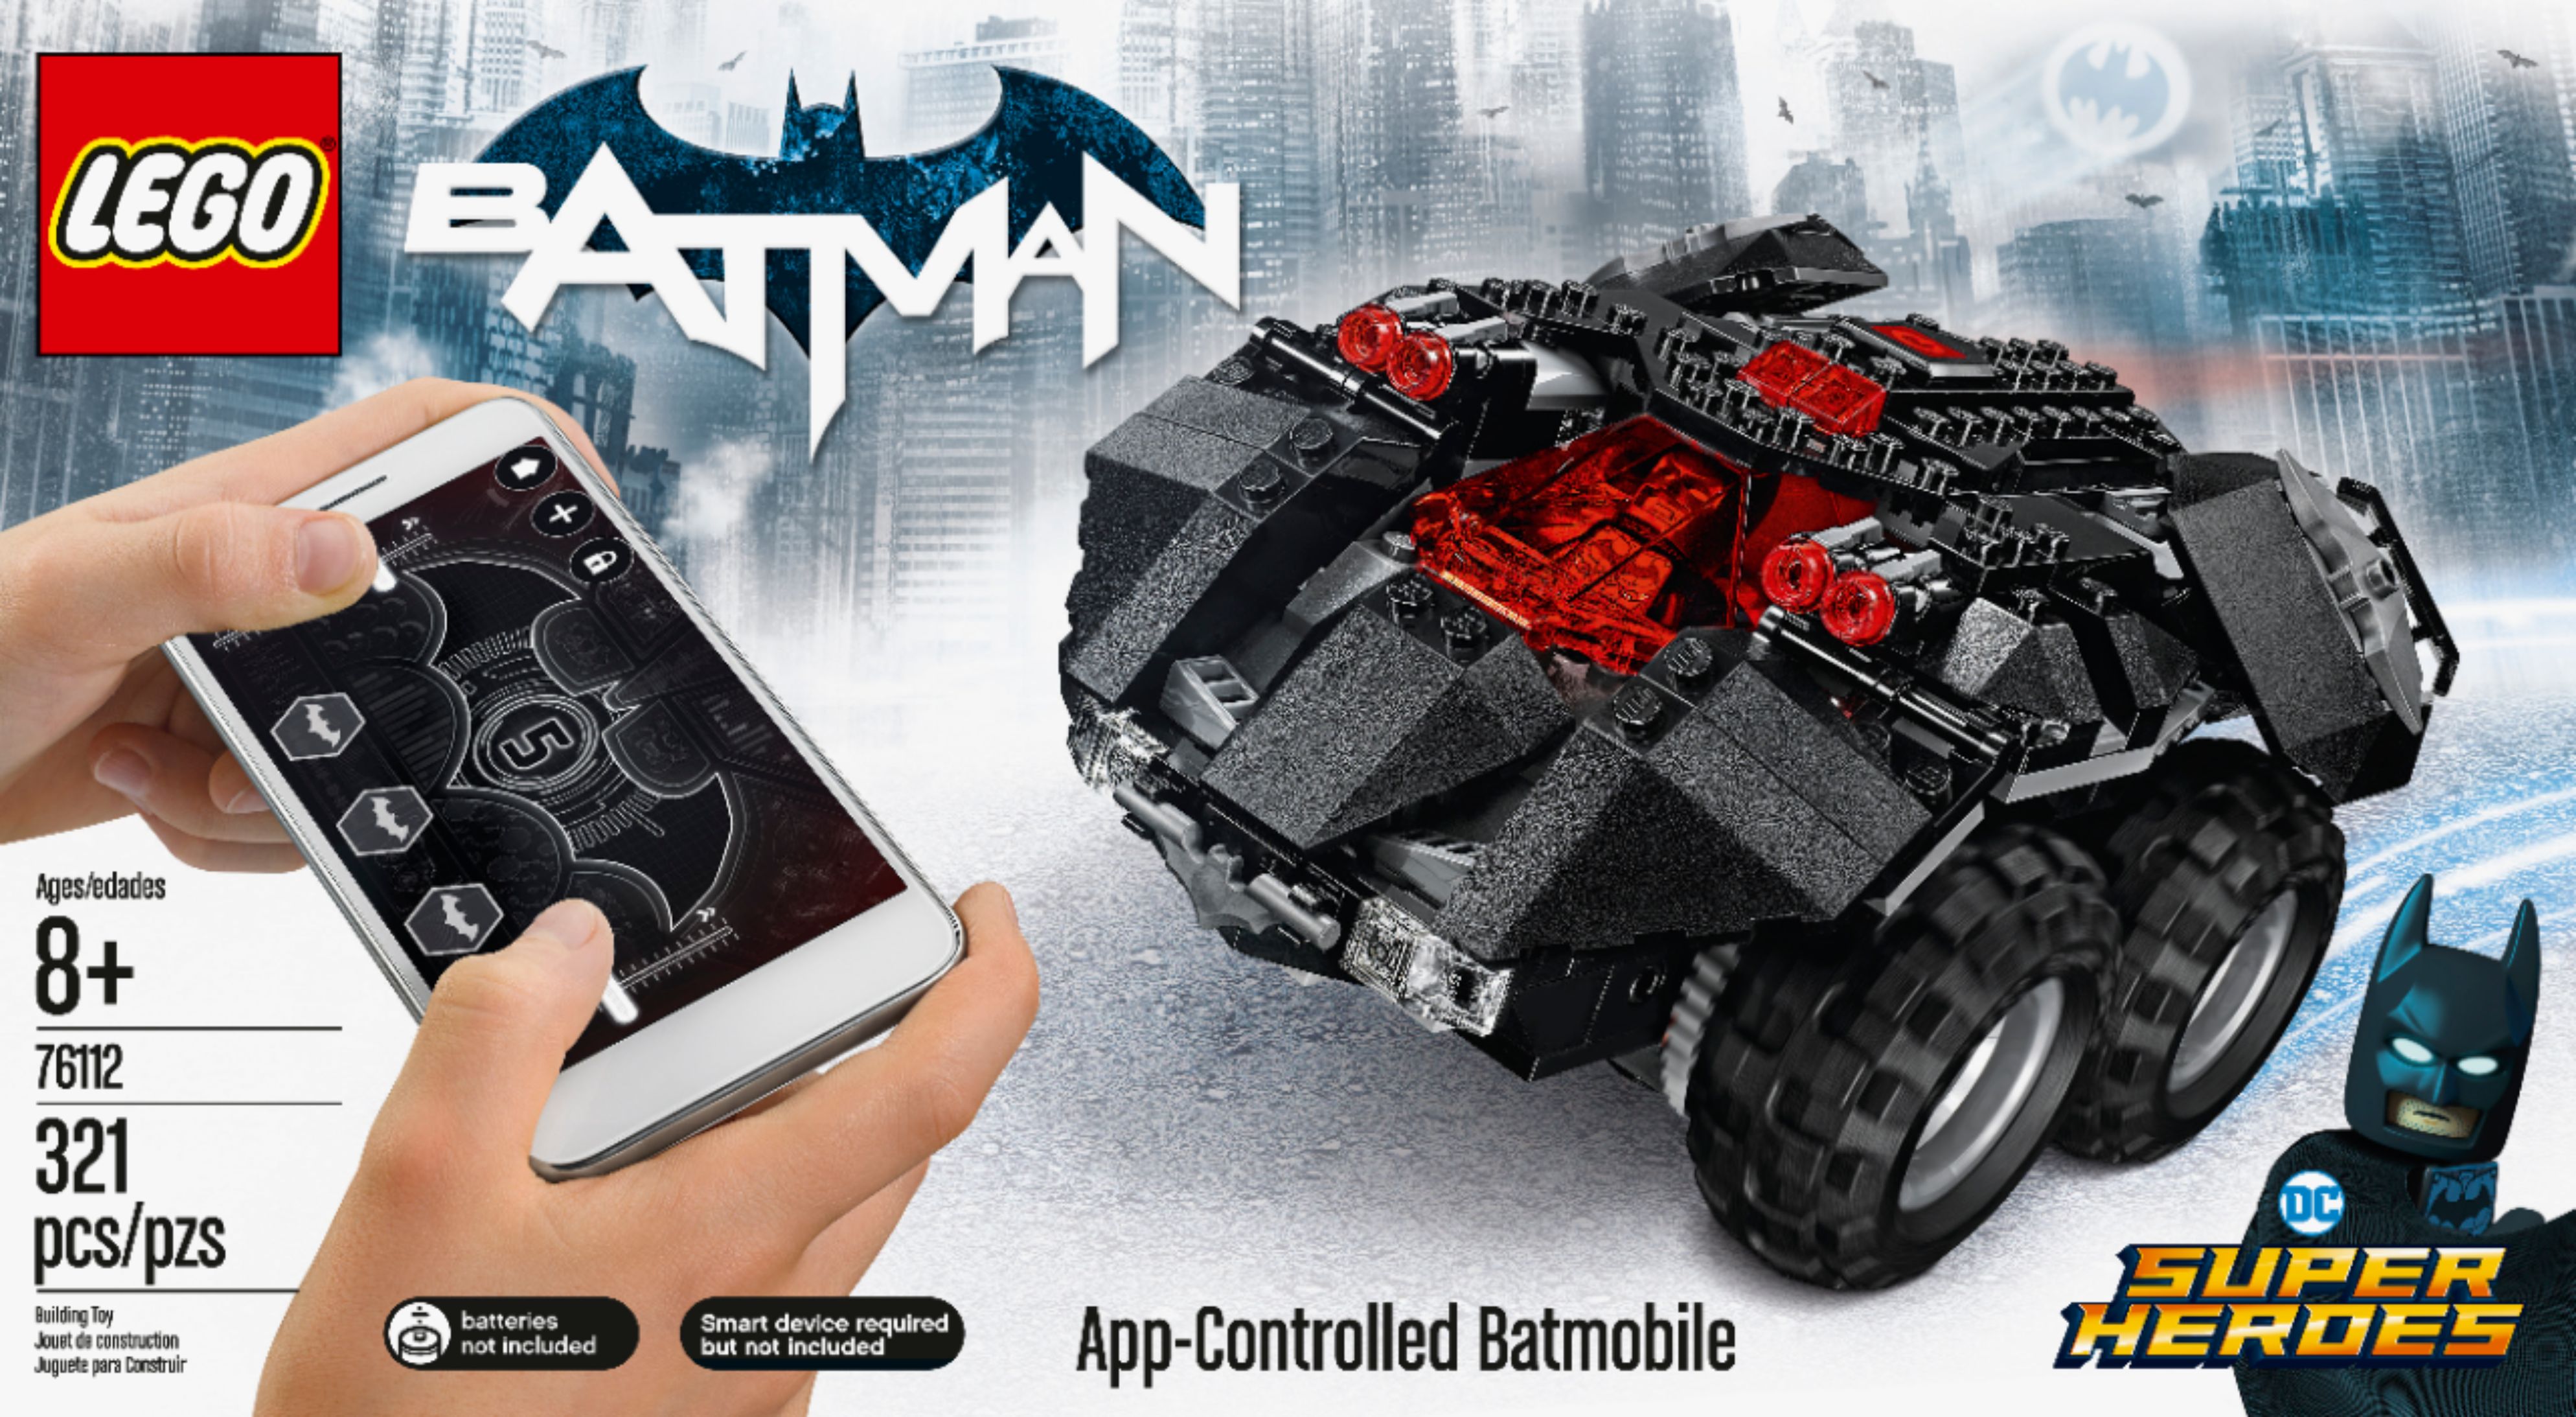 lego batman 76112 app controlled batmobile